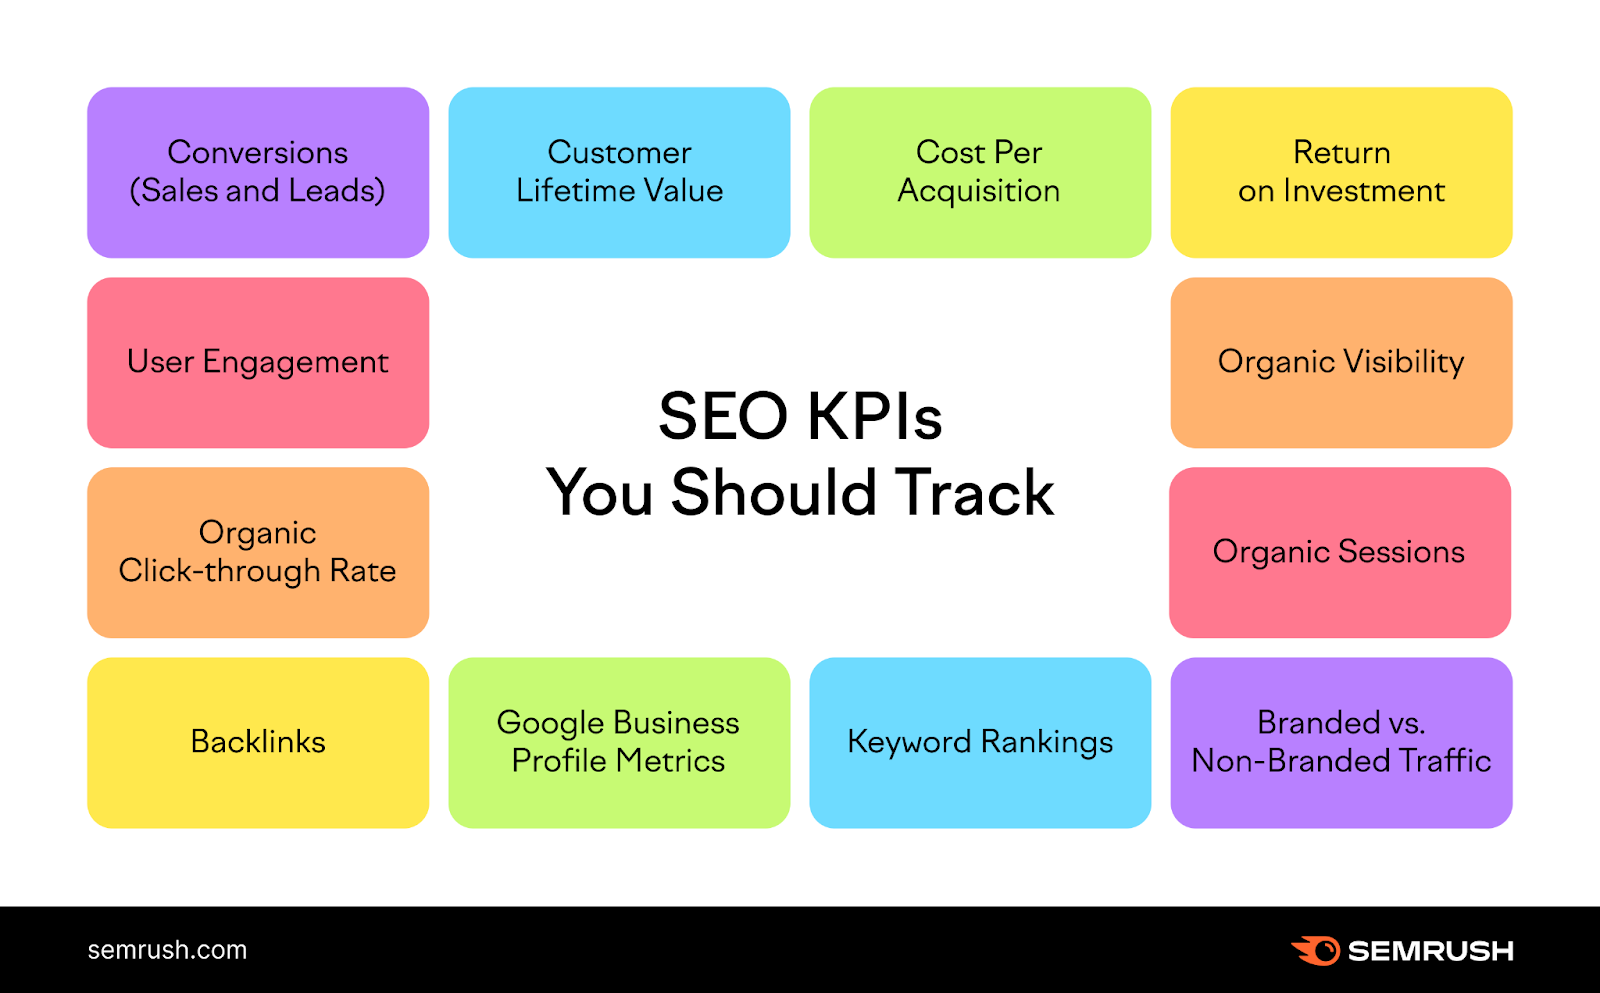 A list of SEO KPIs you should track